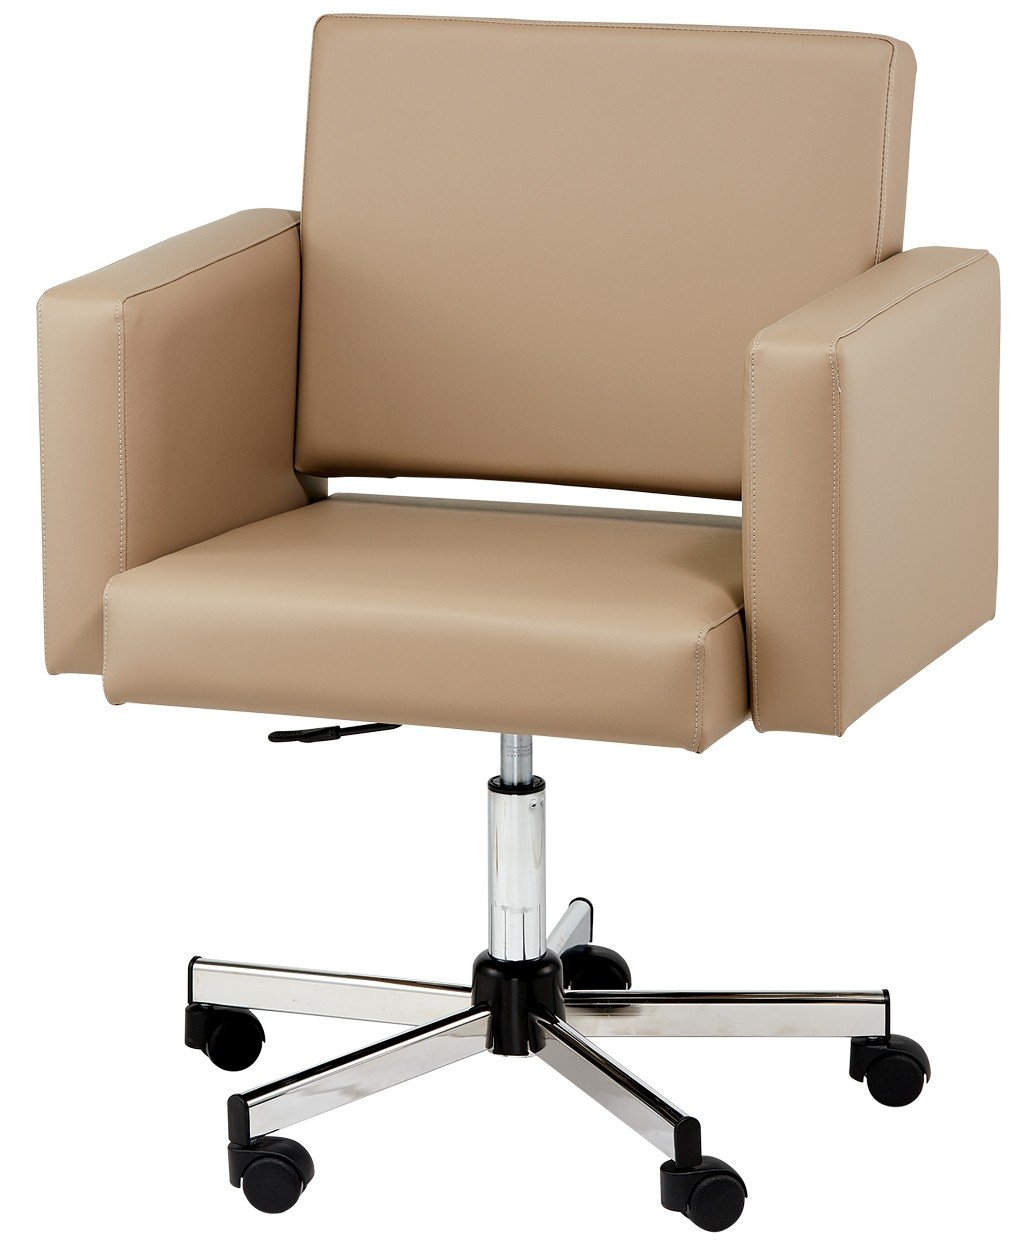 Chair For Nail Salon - Home Interior Design